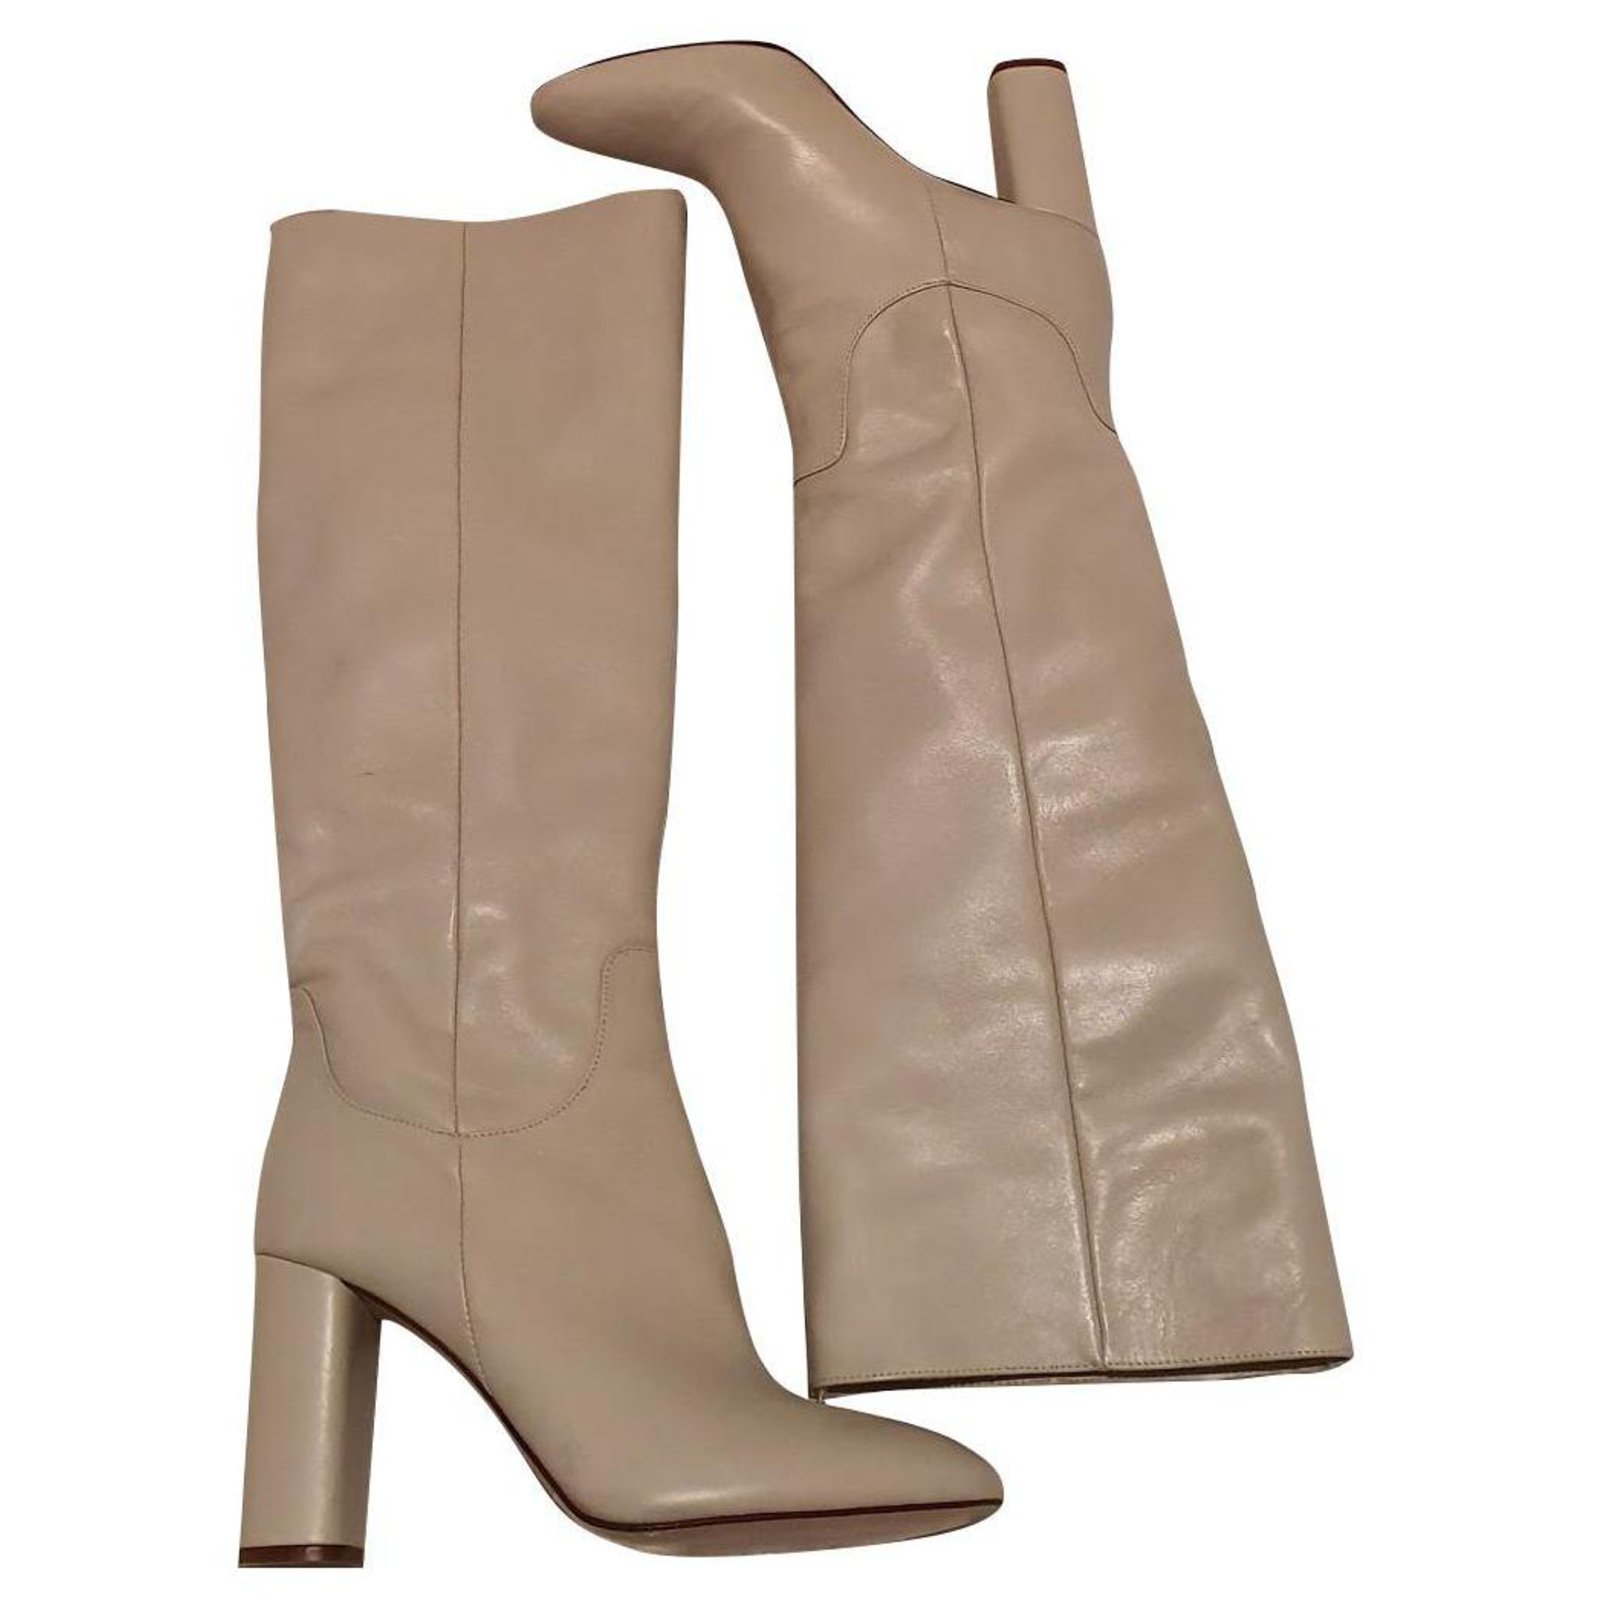 Zara Boots Boots Leather Beige ref 